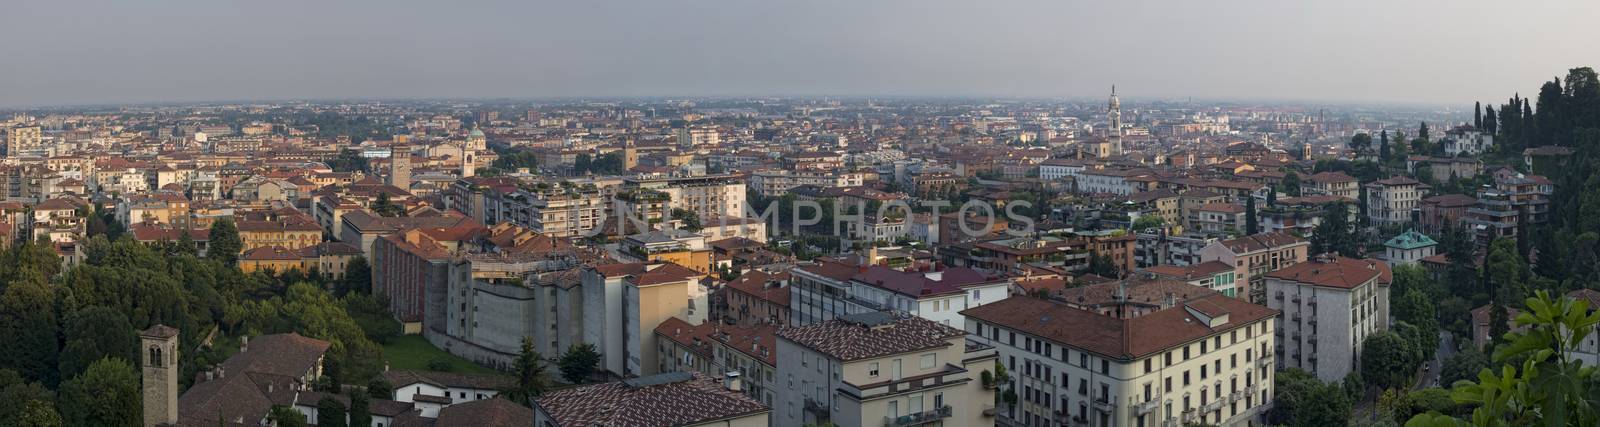 Panorama of lower town of Bergamo , Italy